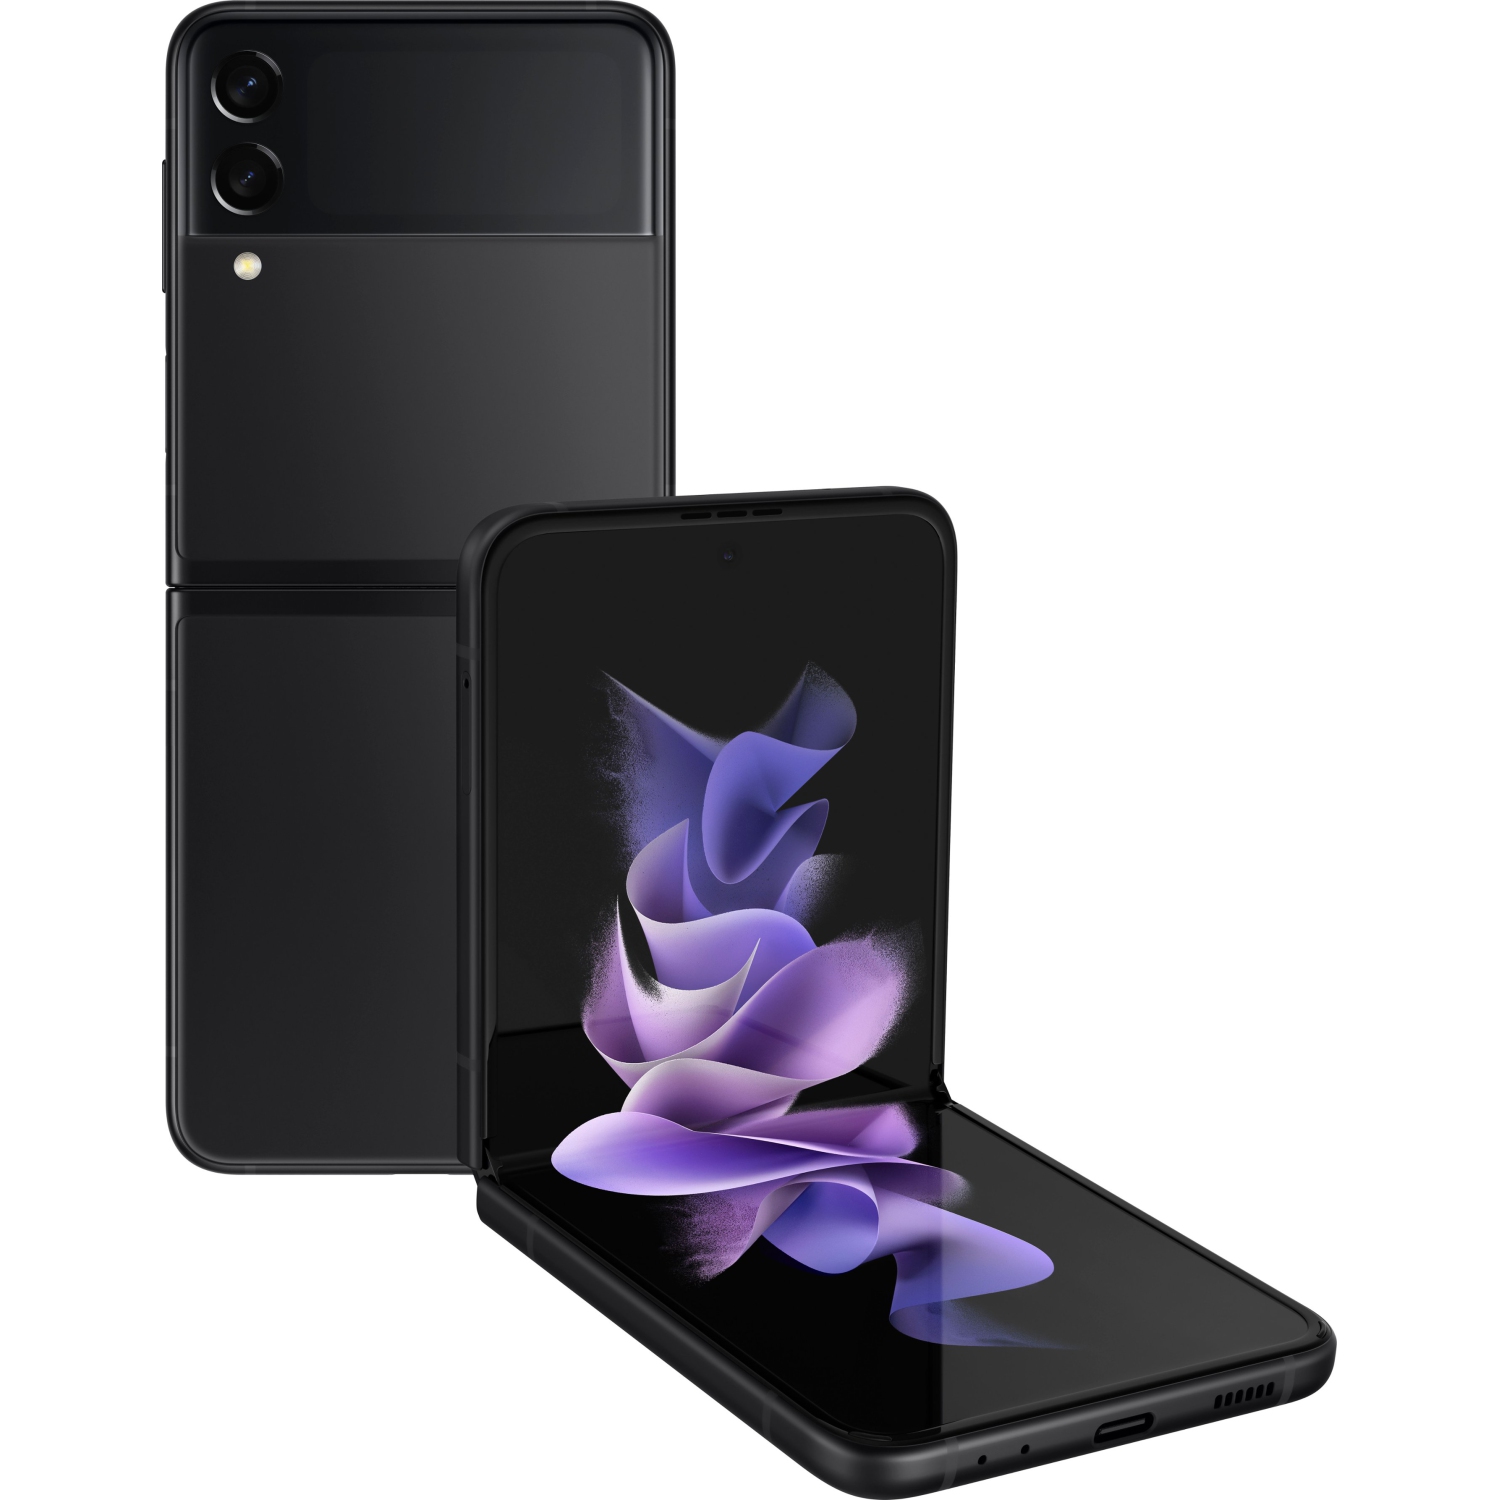 Samsung Galaxy Z Flip3 5G 256GB Smartphone - Phantom Black - Unlocked - Certified Refurbished